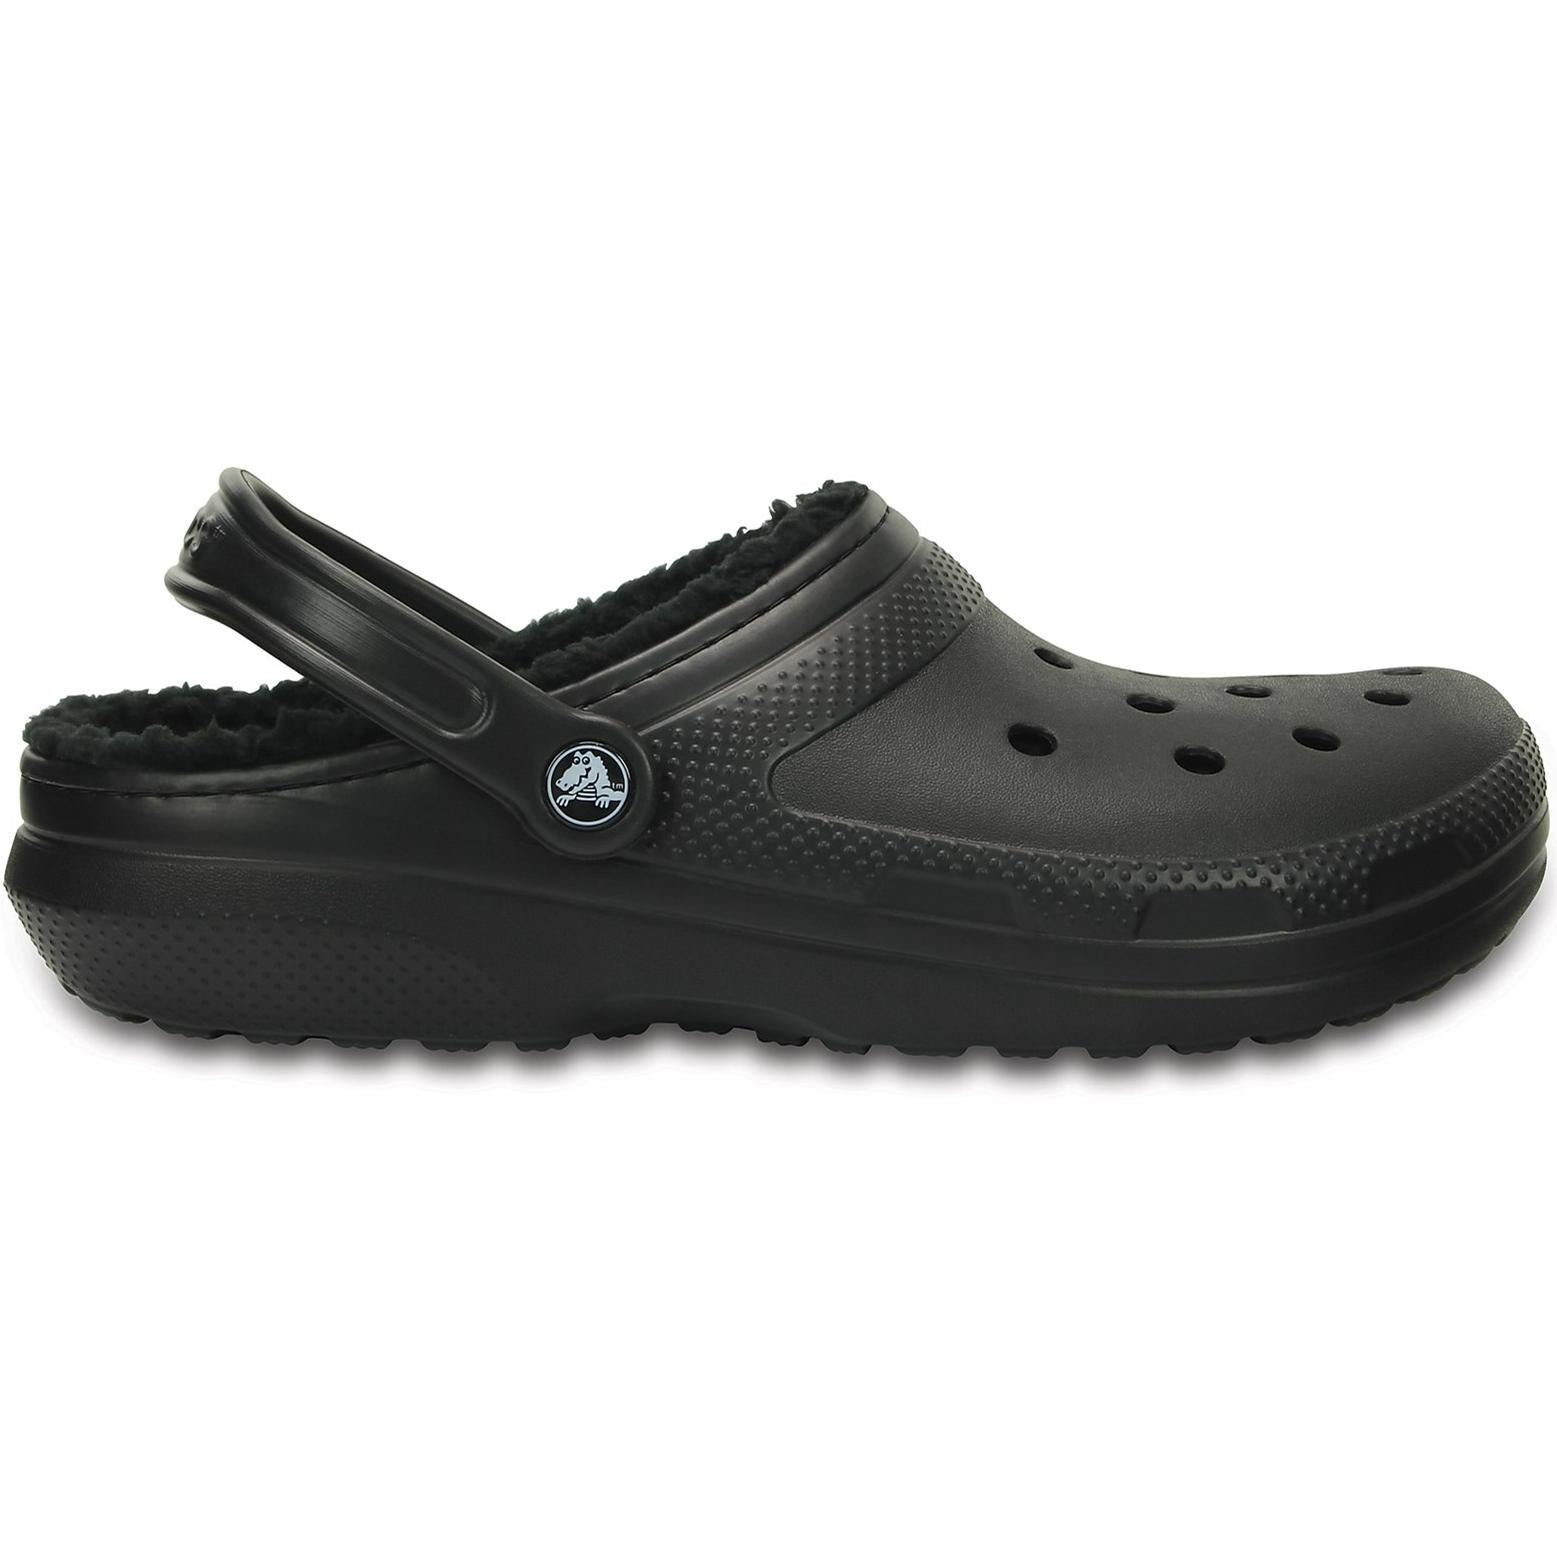 Crocs Classic Lined Clog Shoes